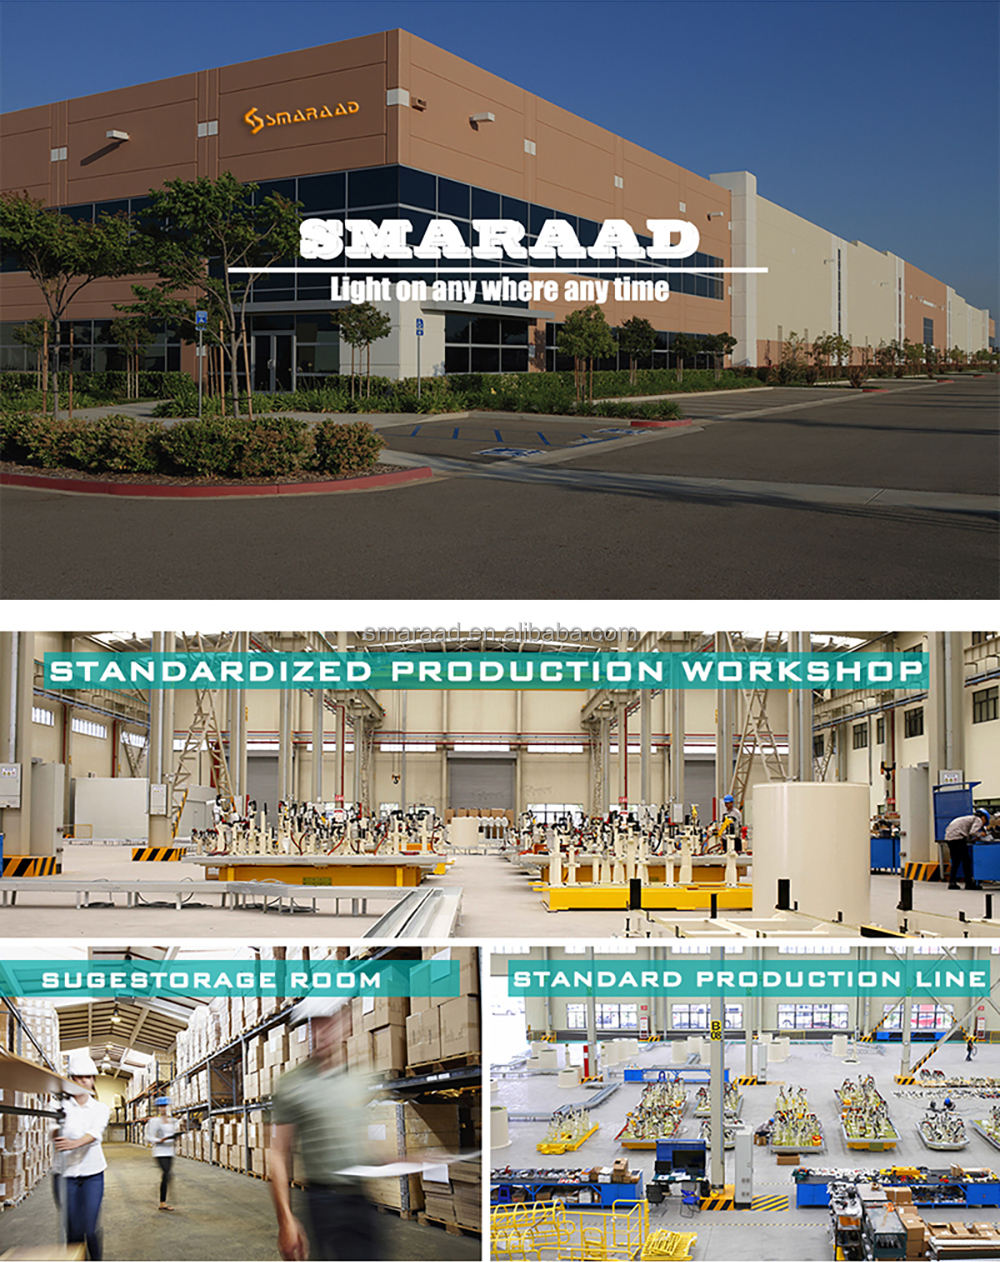 Smaraad New Energy company 